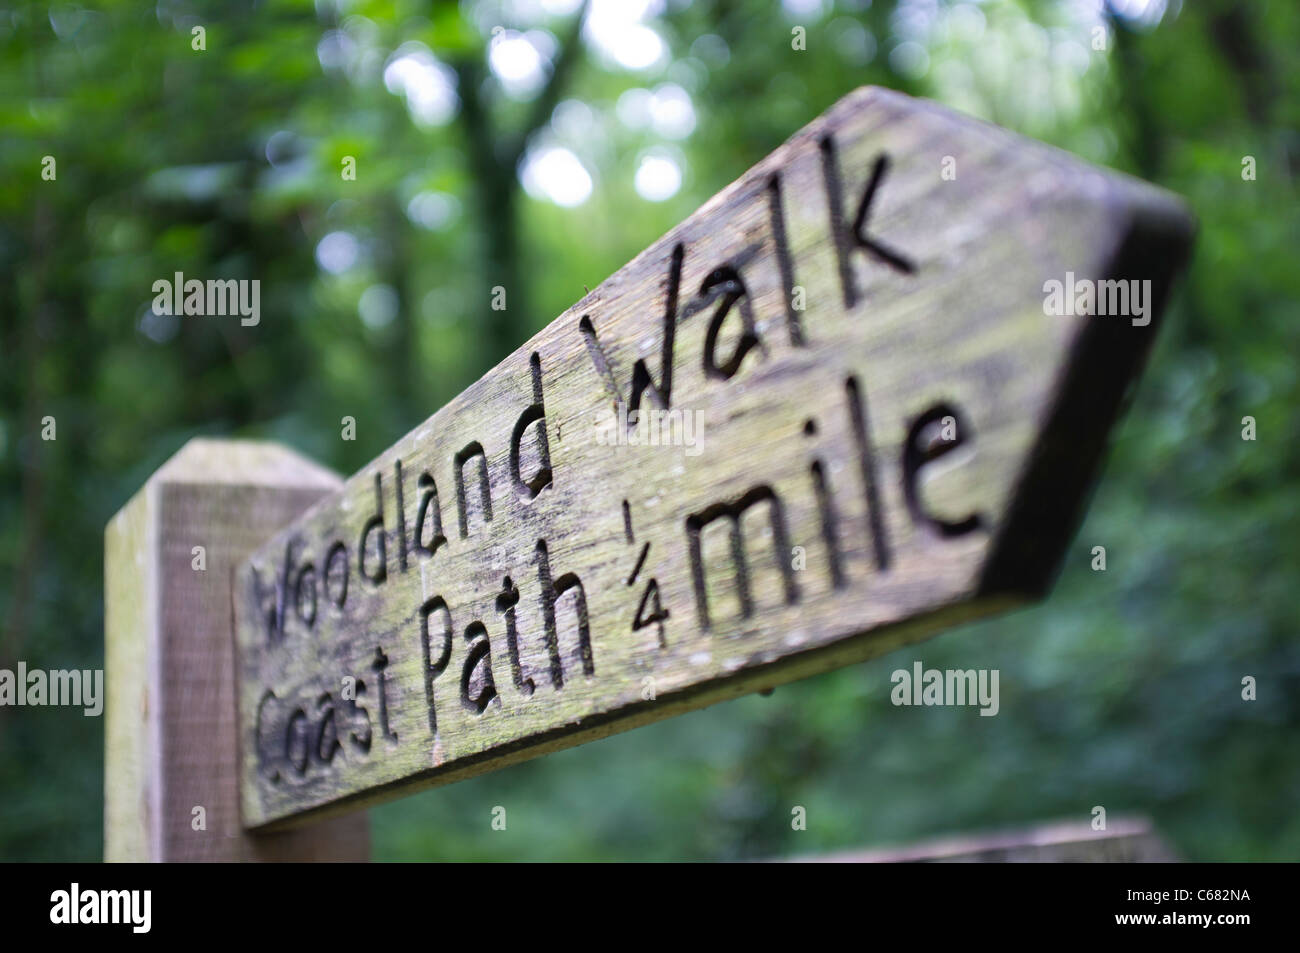 Woodland Walk costal path sign Stock Photo